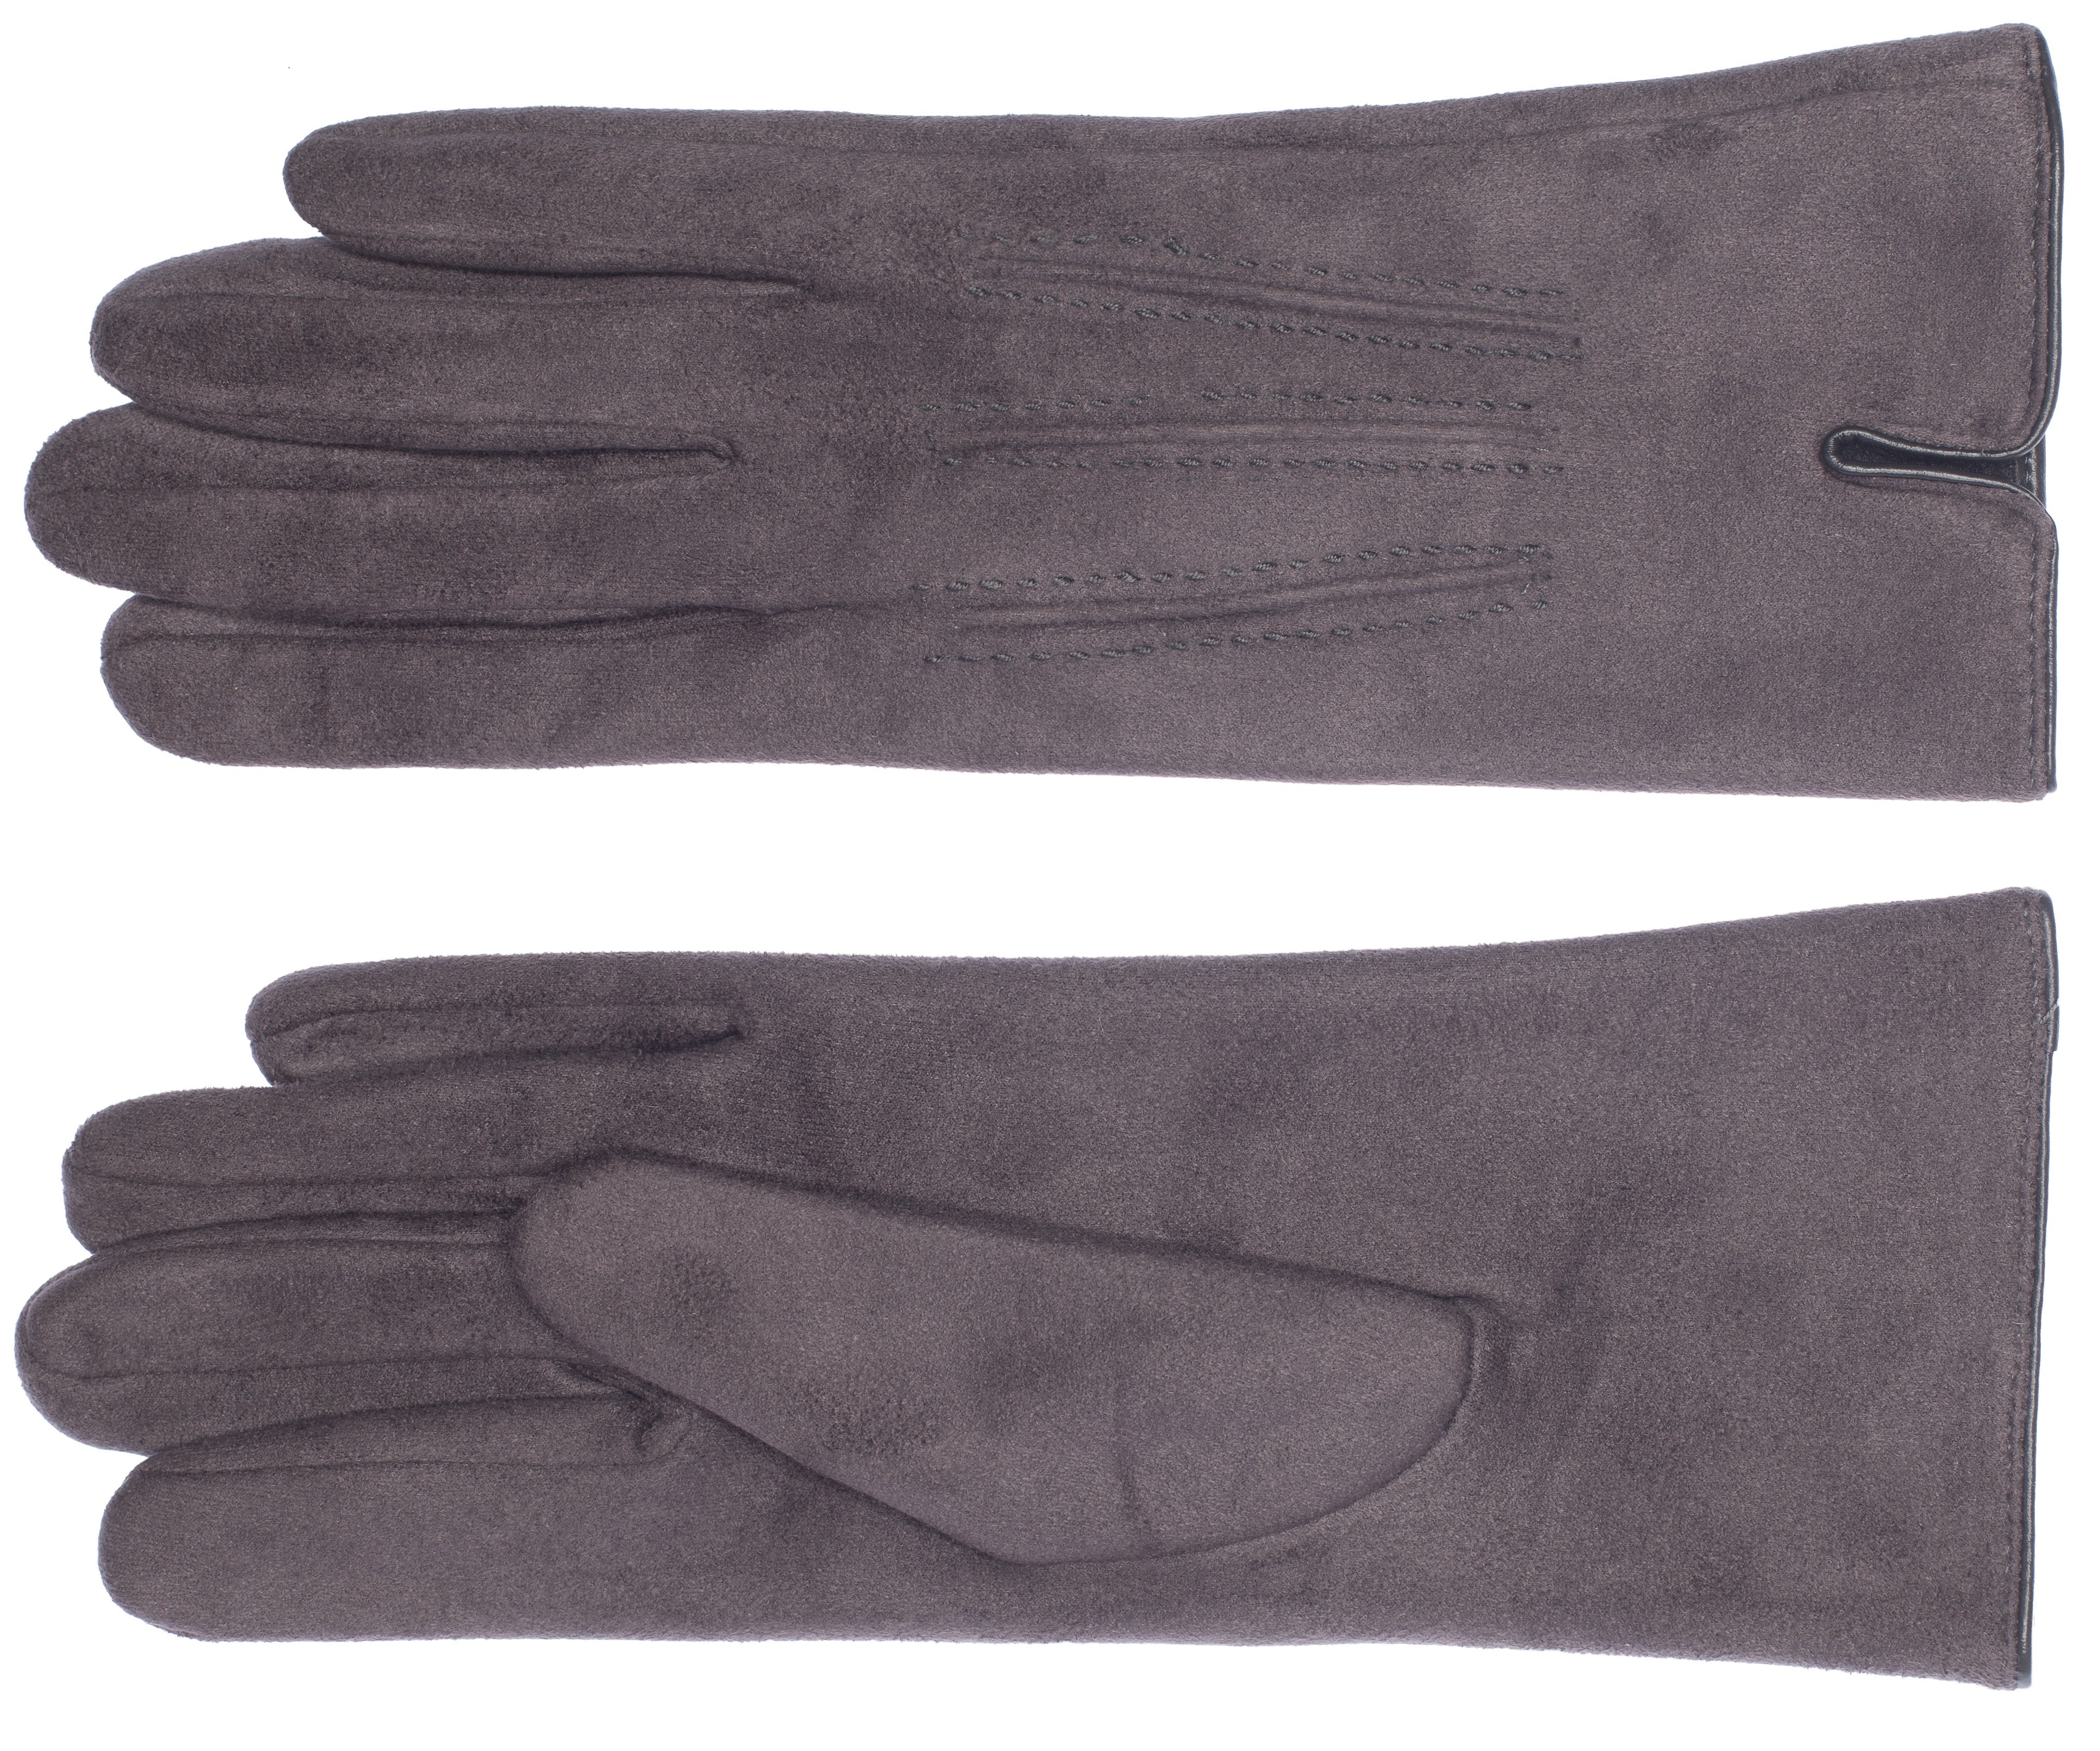 EEM Damen Handschuhe 100% vegan, Velours Optik, weiches elastisches Material, kuscheliges Teddyfleece